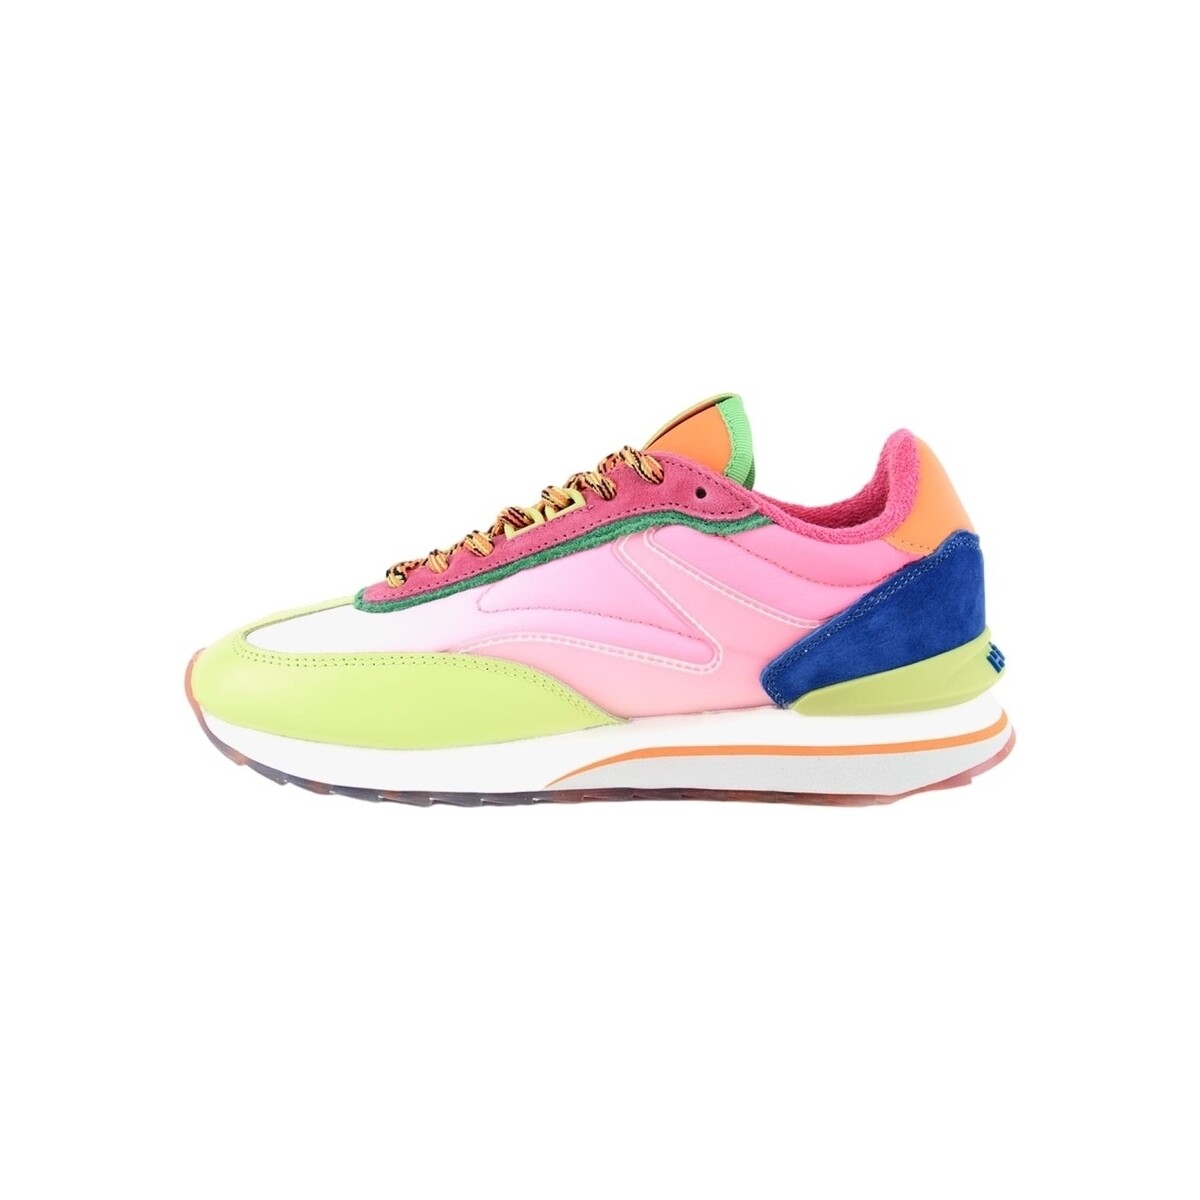 HOFF Multicolore Dragon Fruit Sneakers - Multicolor DTNM1KqP